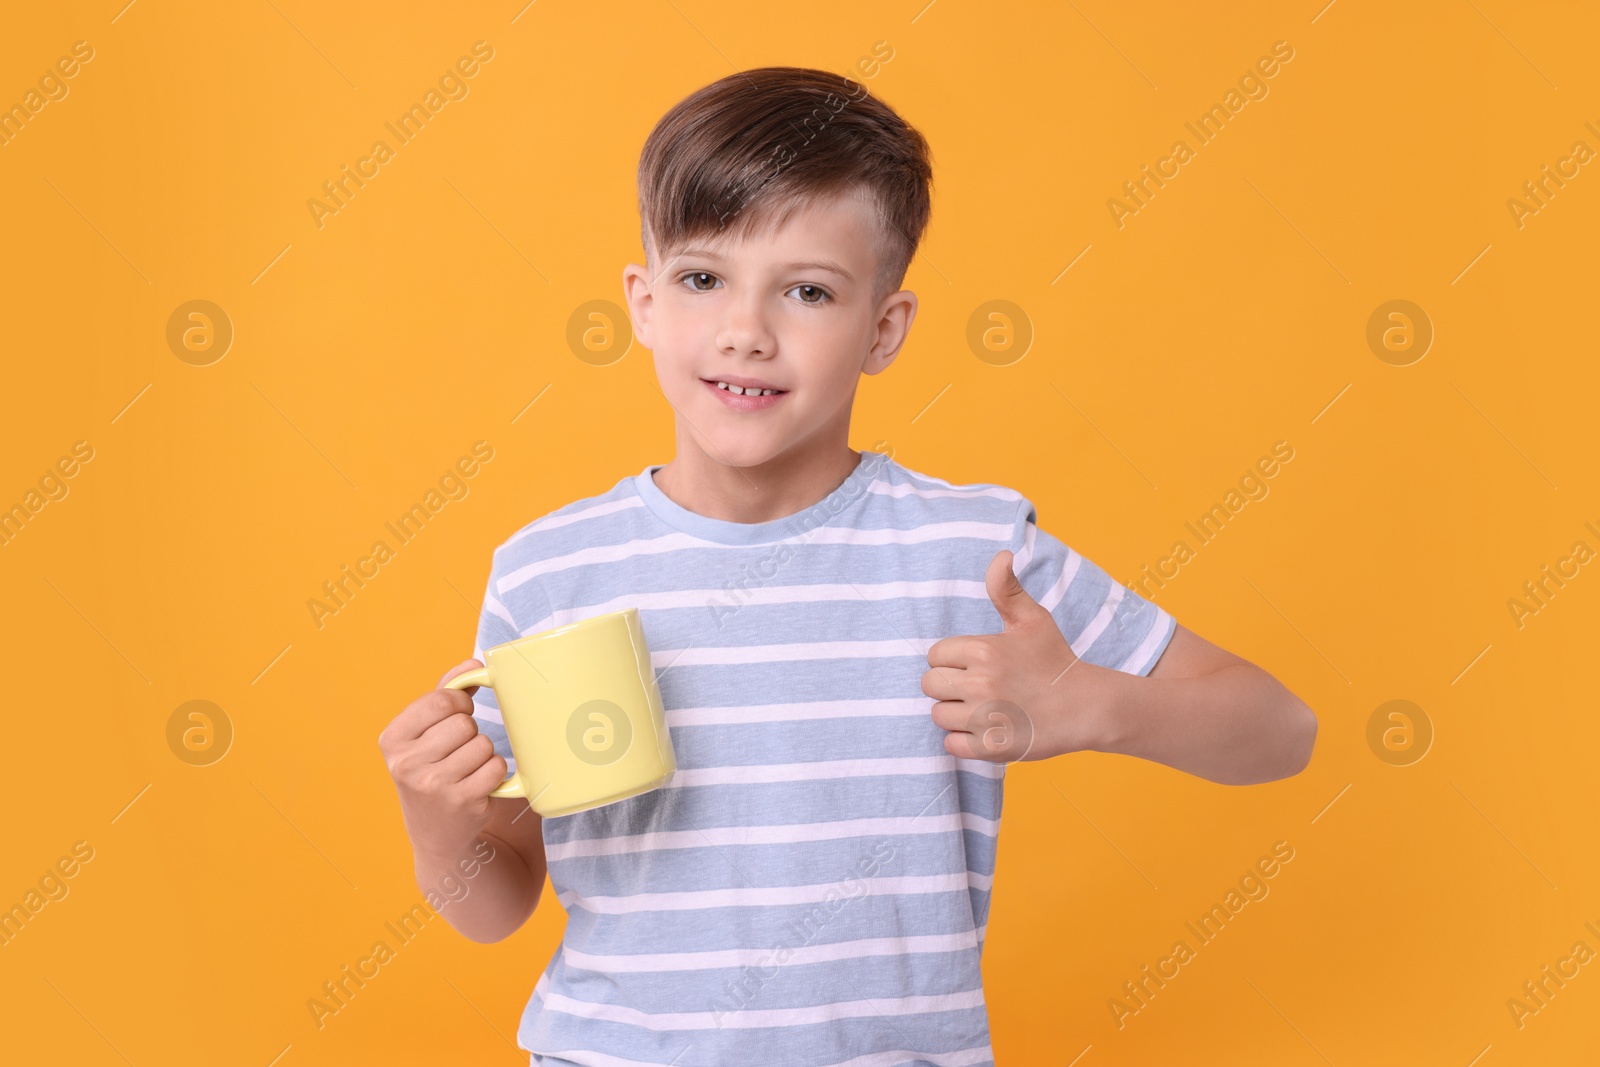 Photo of Cute boy with yellow ceramic mug showing thumbs up on orange background